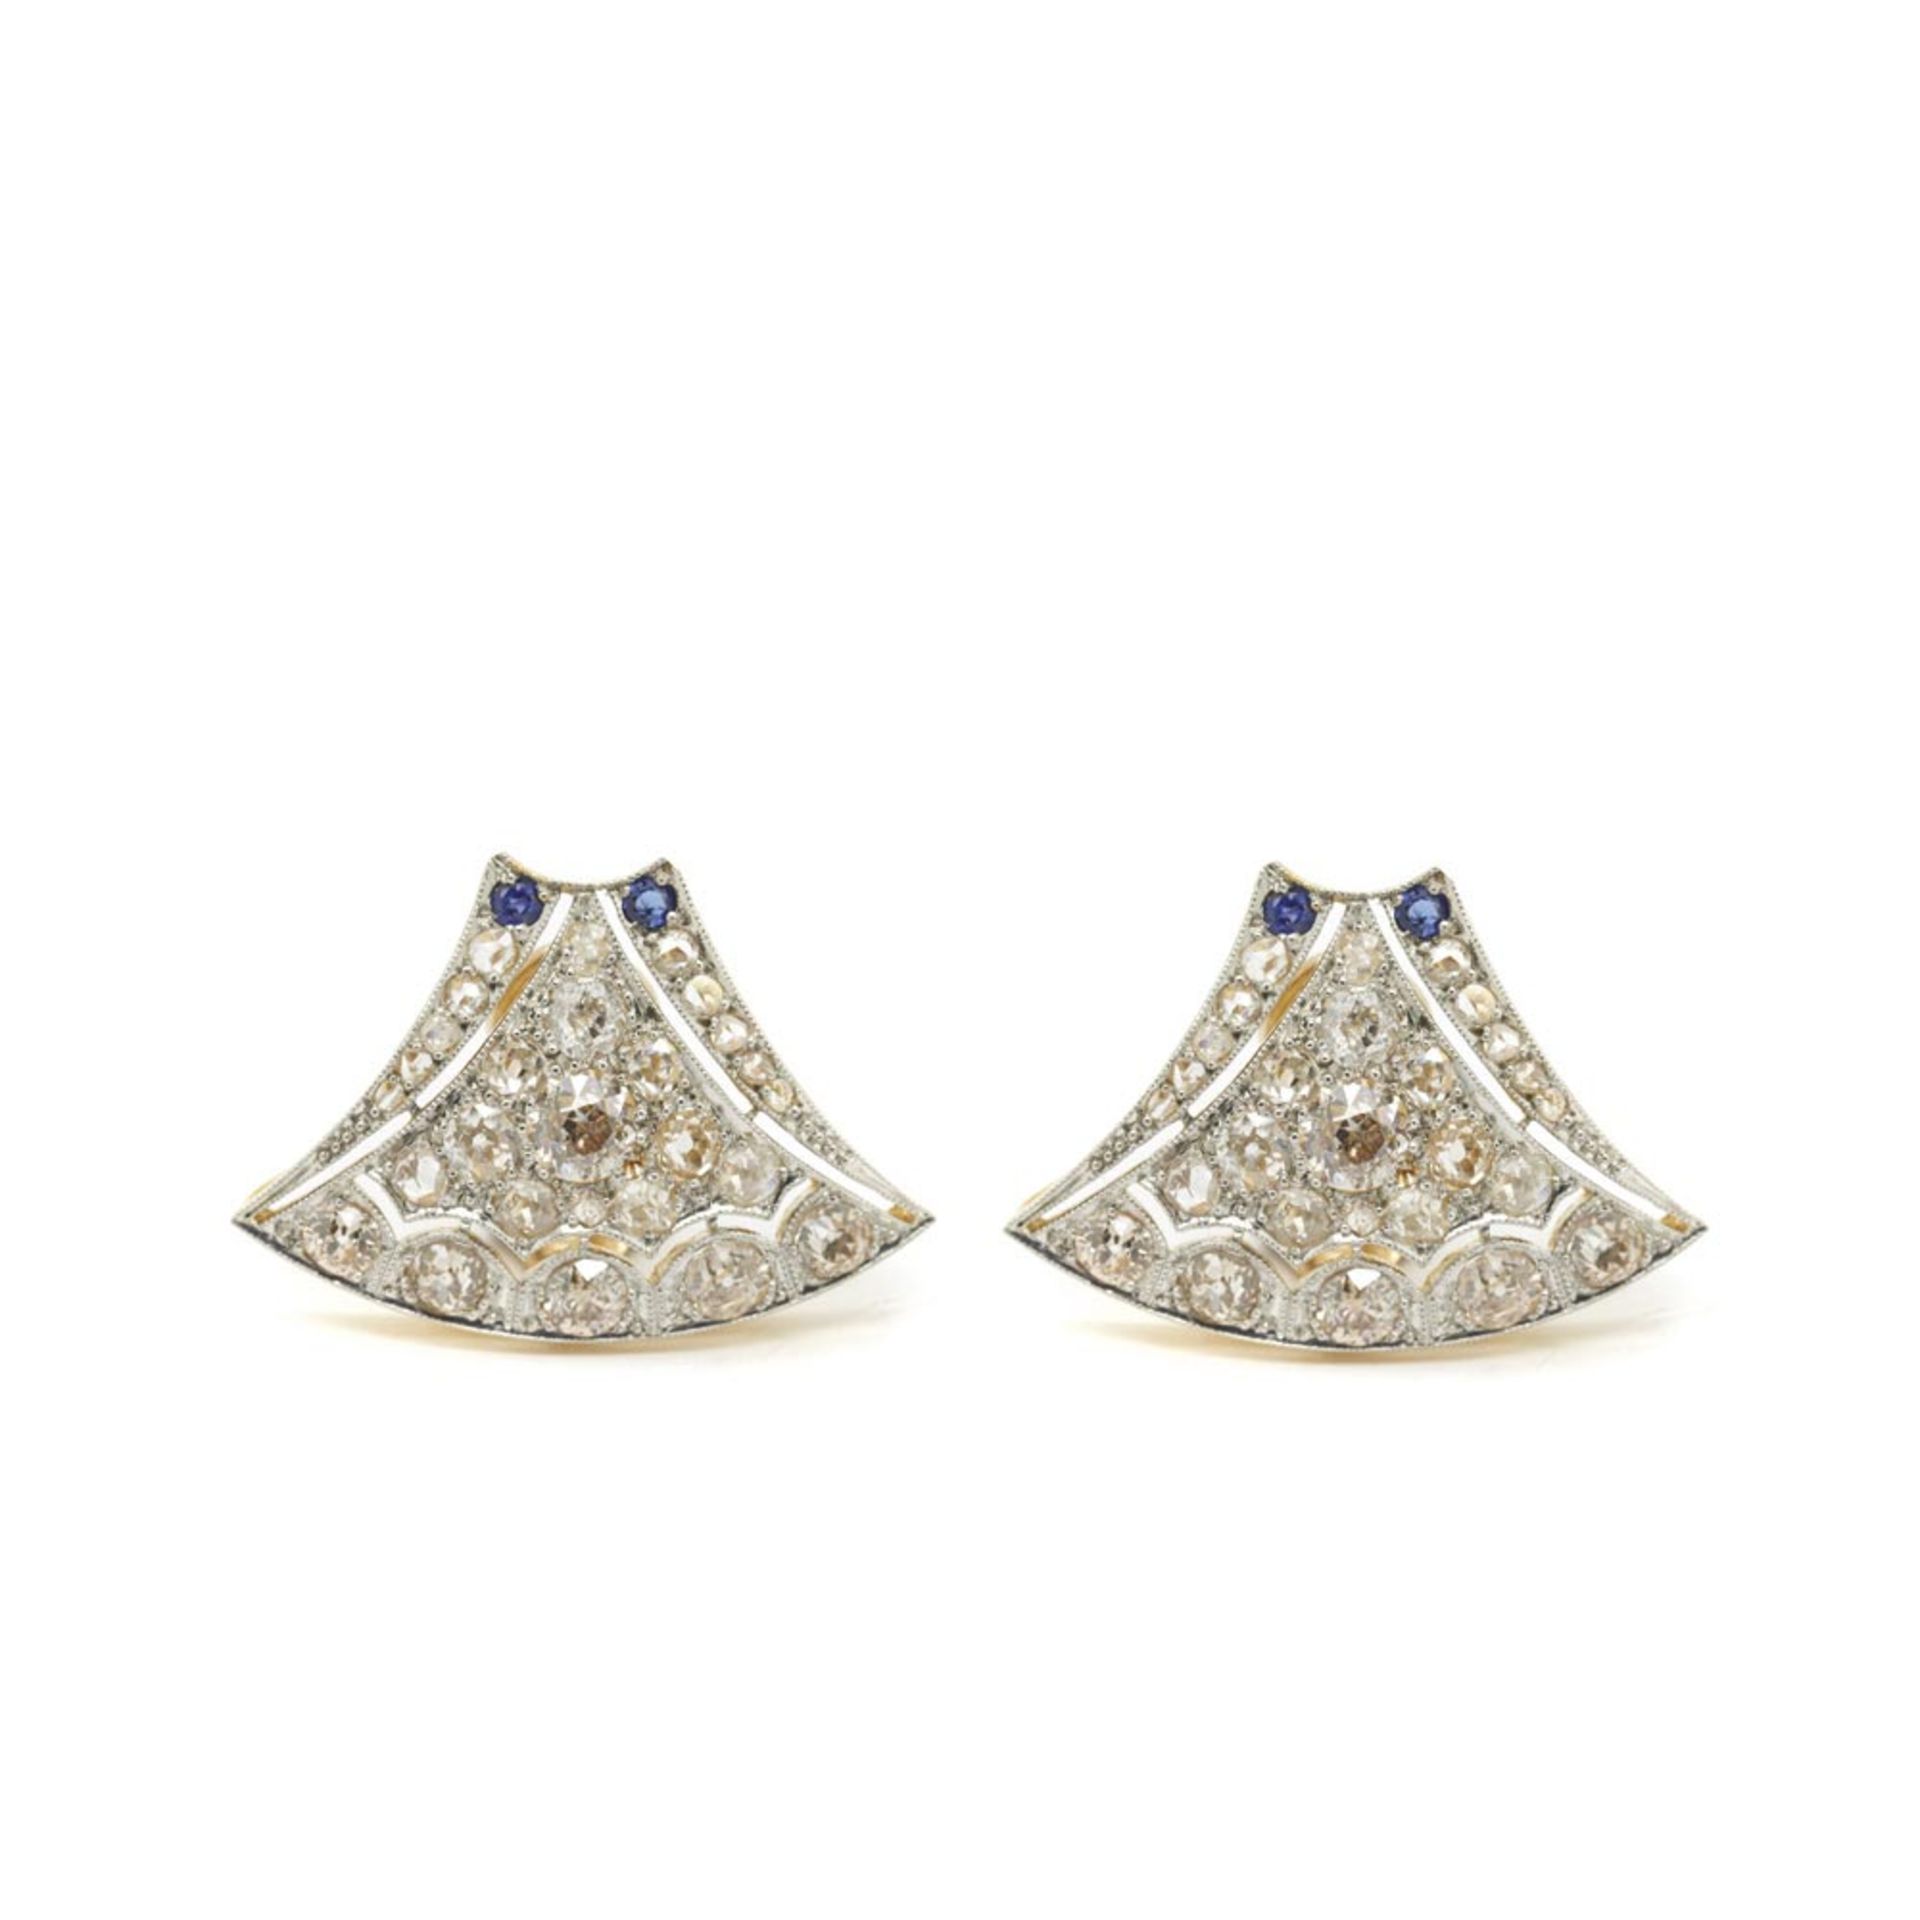 Art Deco gold, platinum, diamonds and blue sapphires earrings c.1930